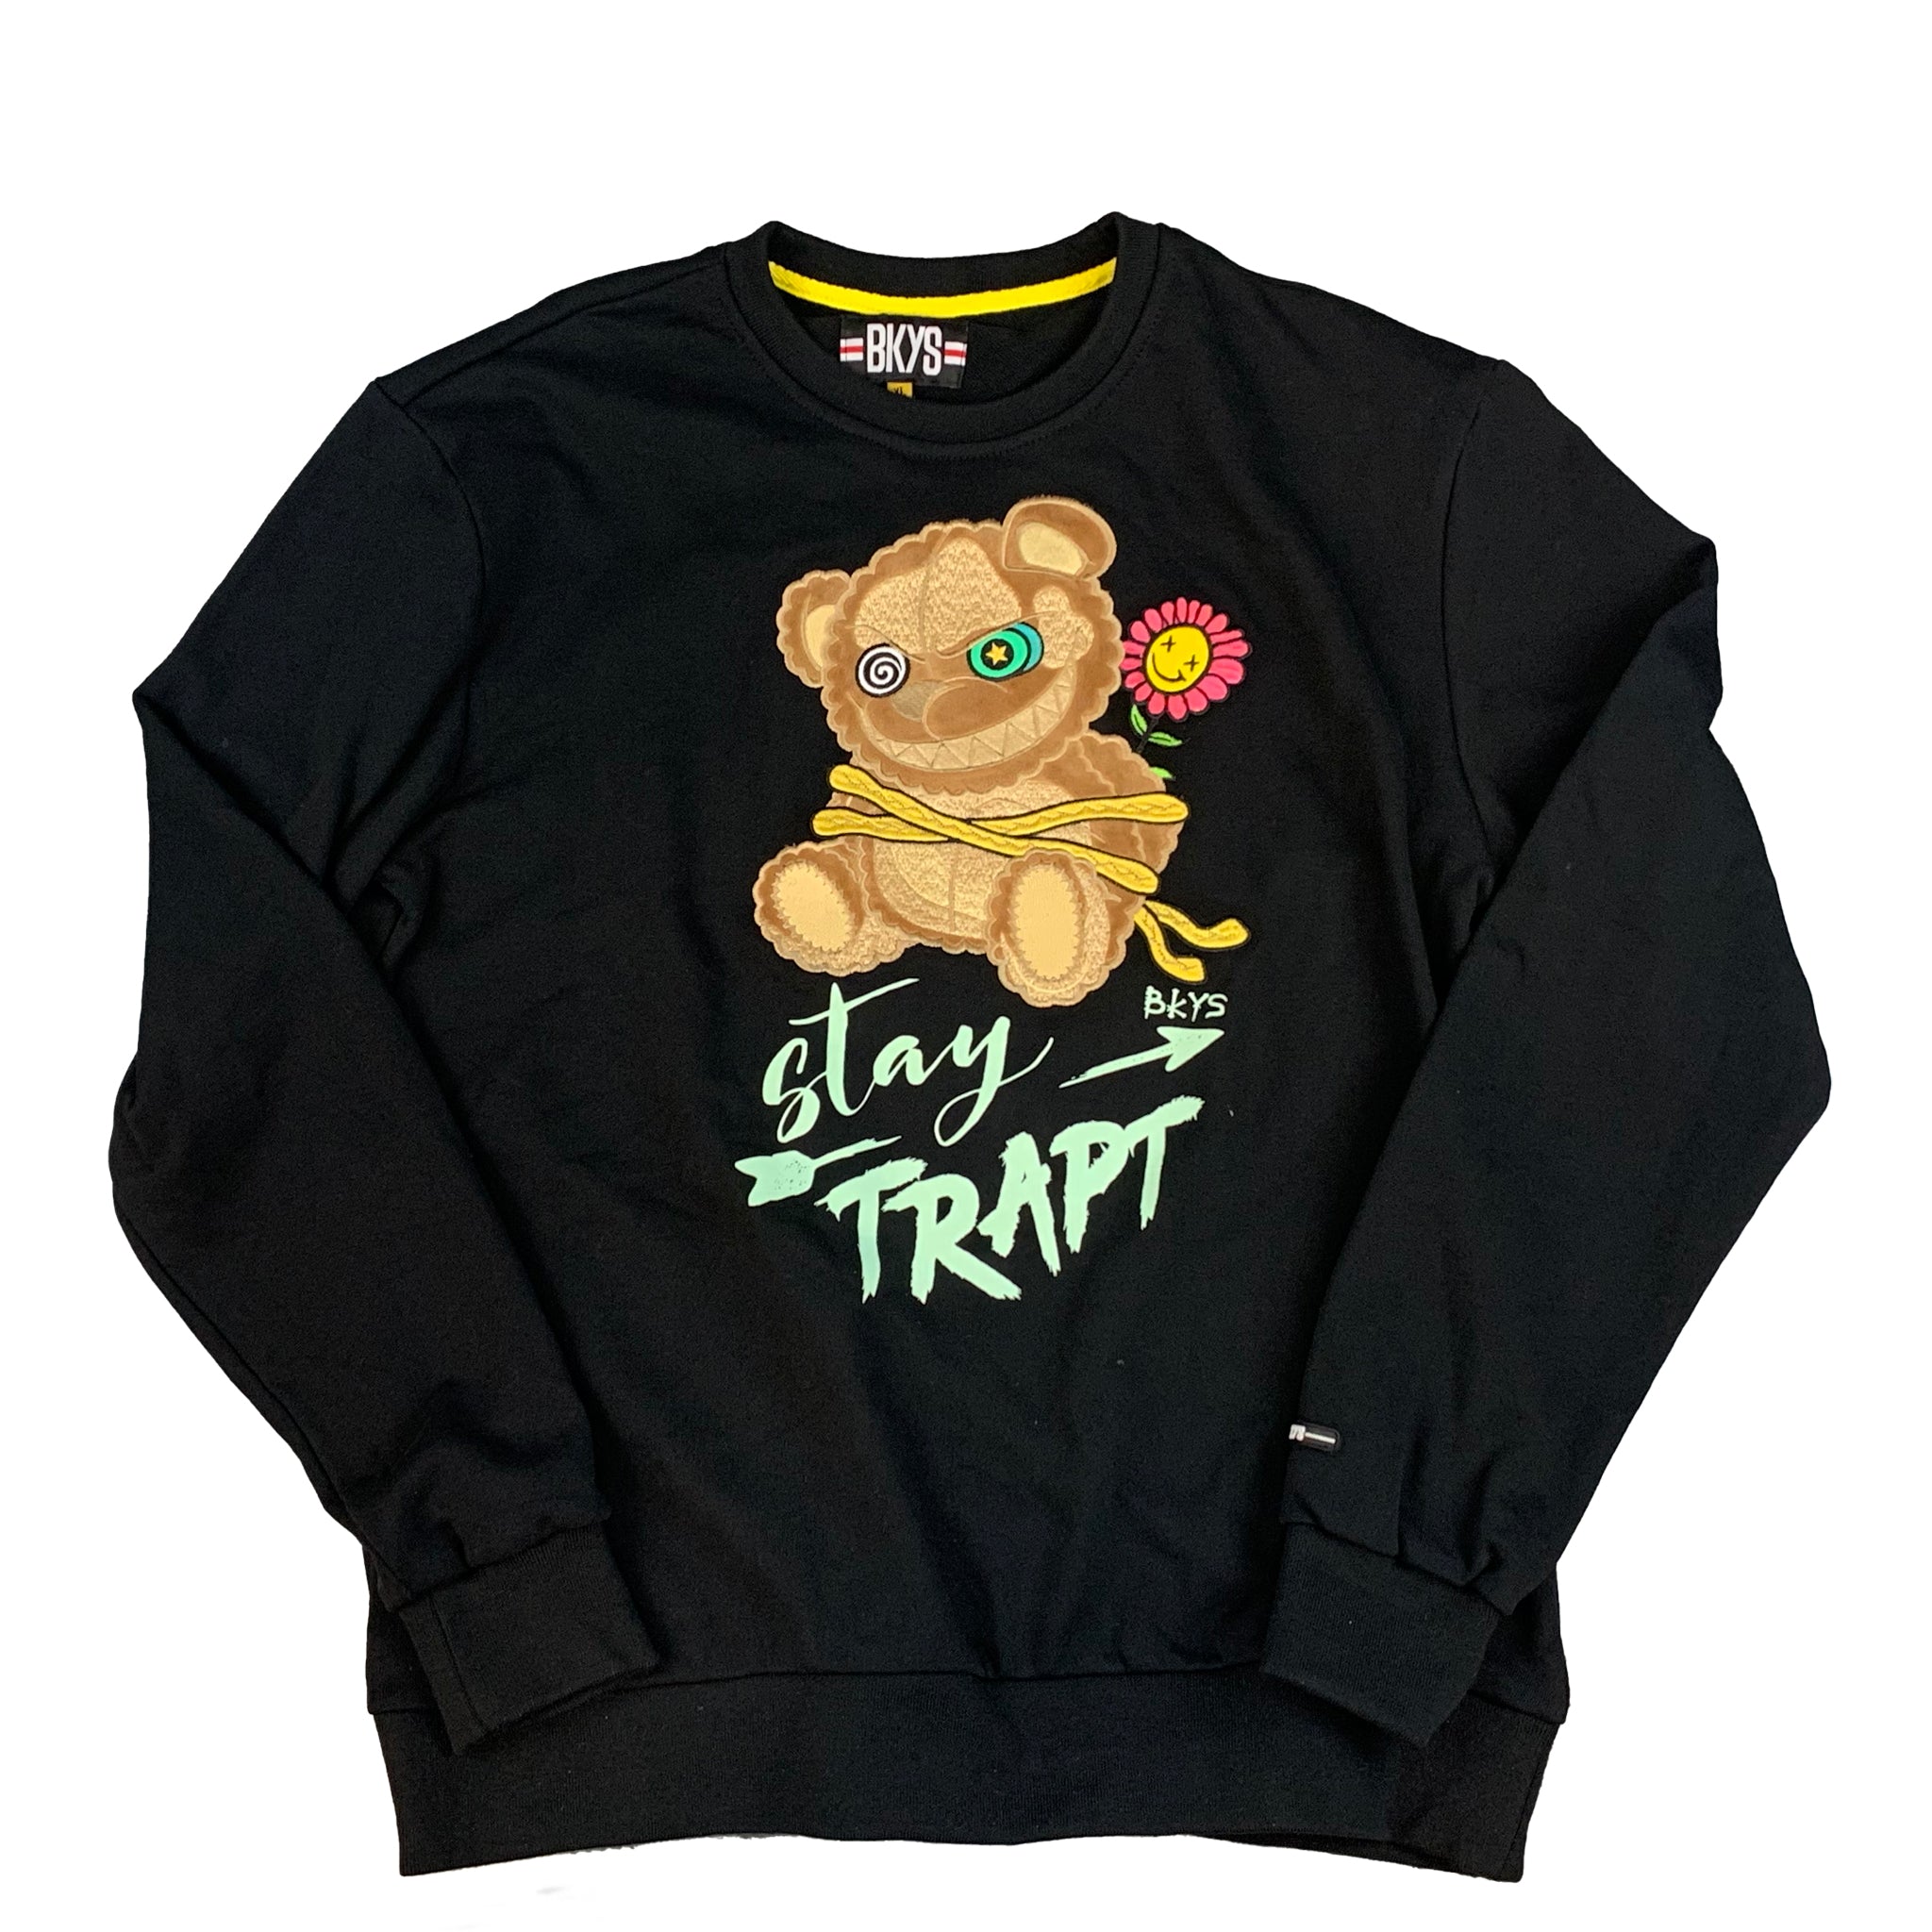 Stay Trapt Crew Sweatshirt